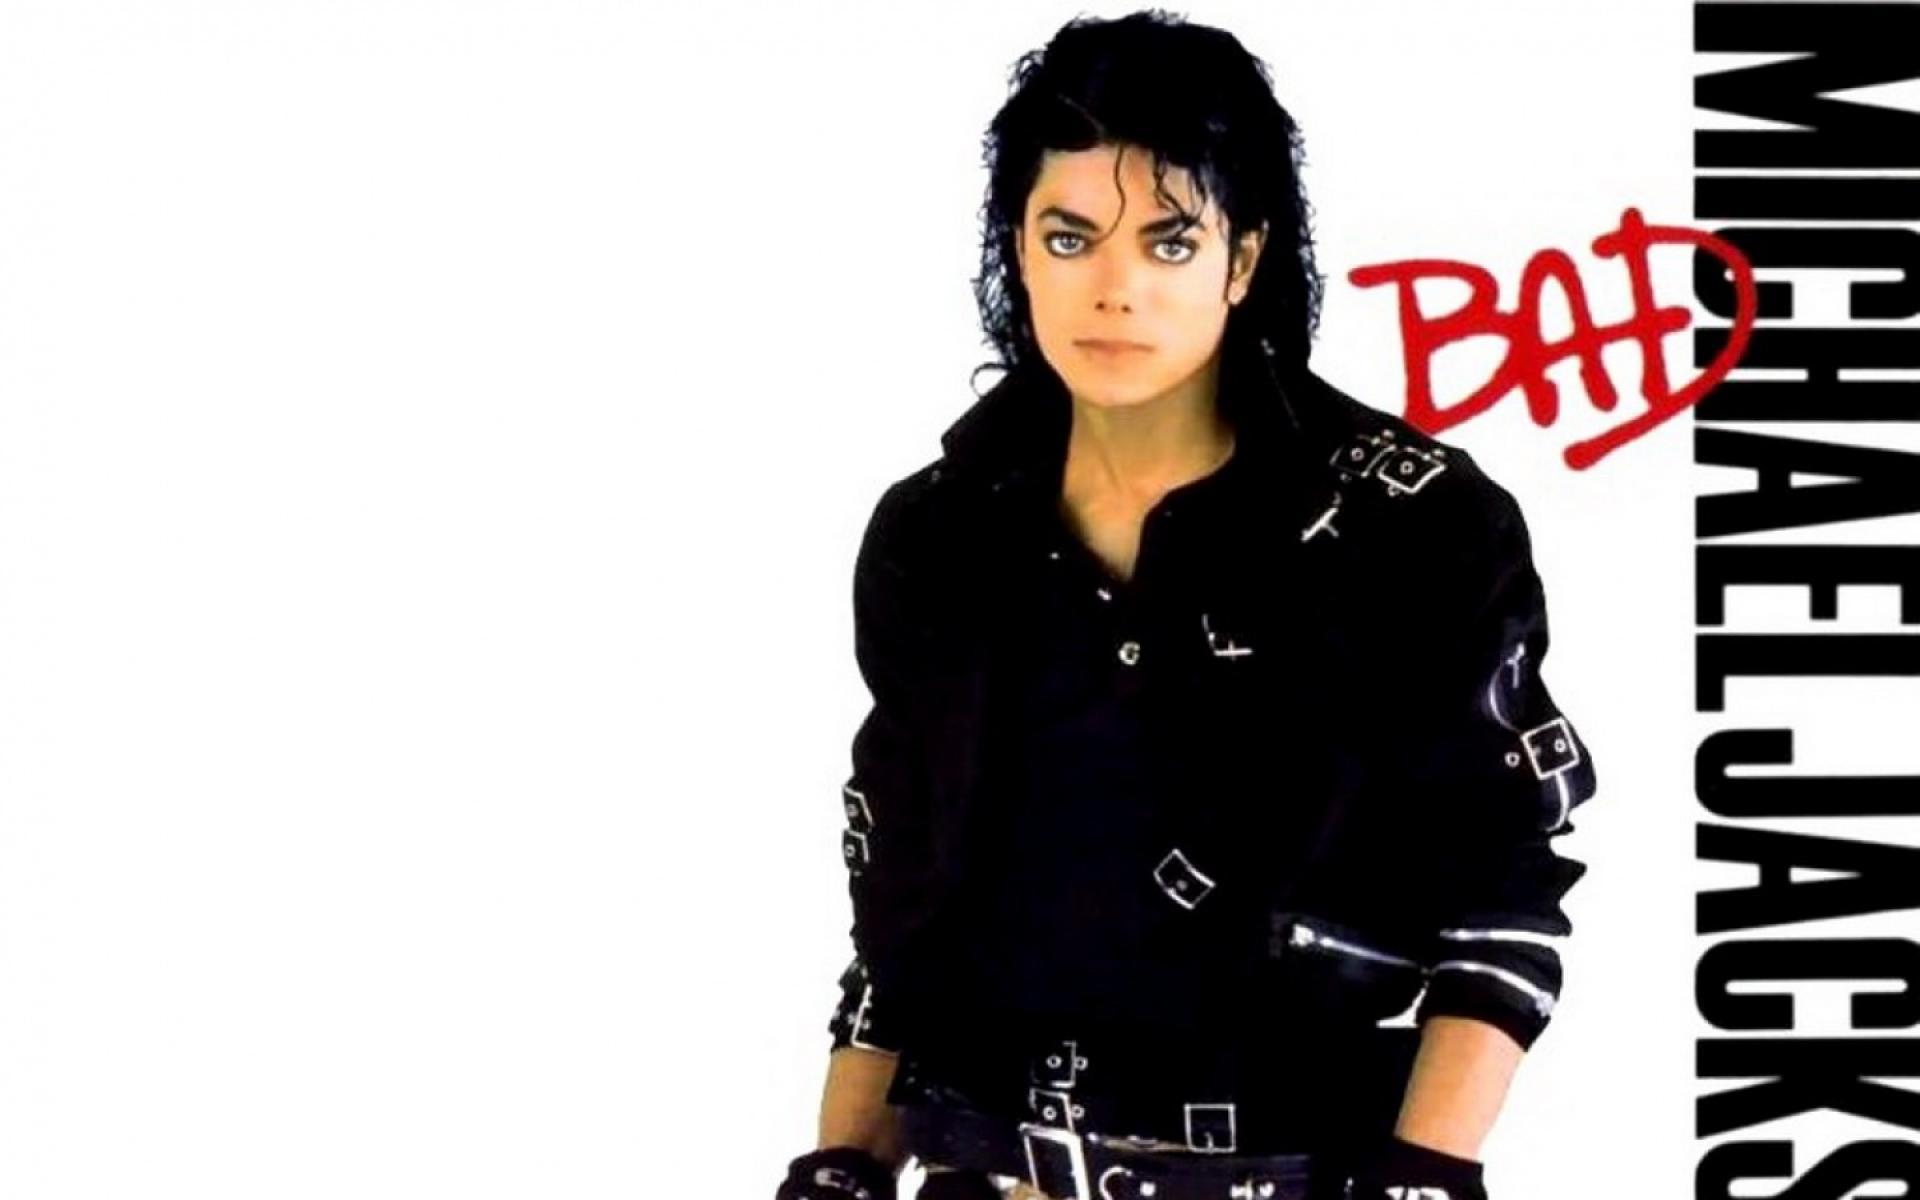 Michael Jackson Wallpaper Bad